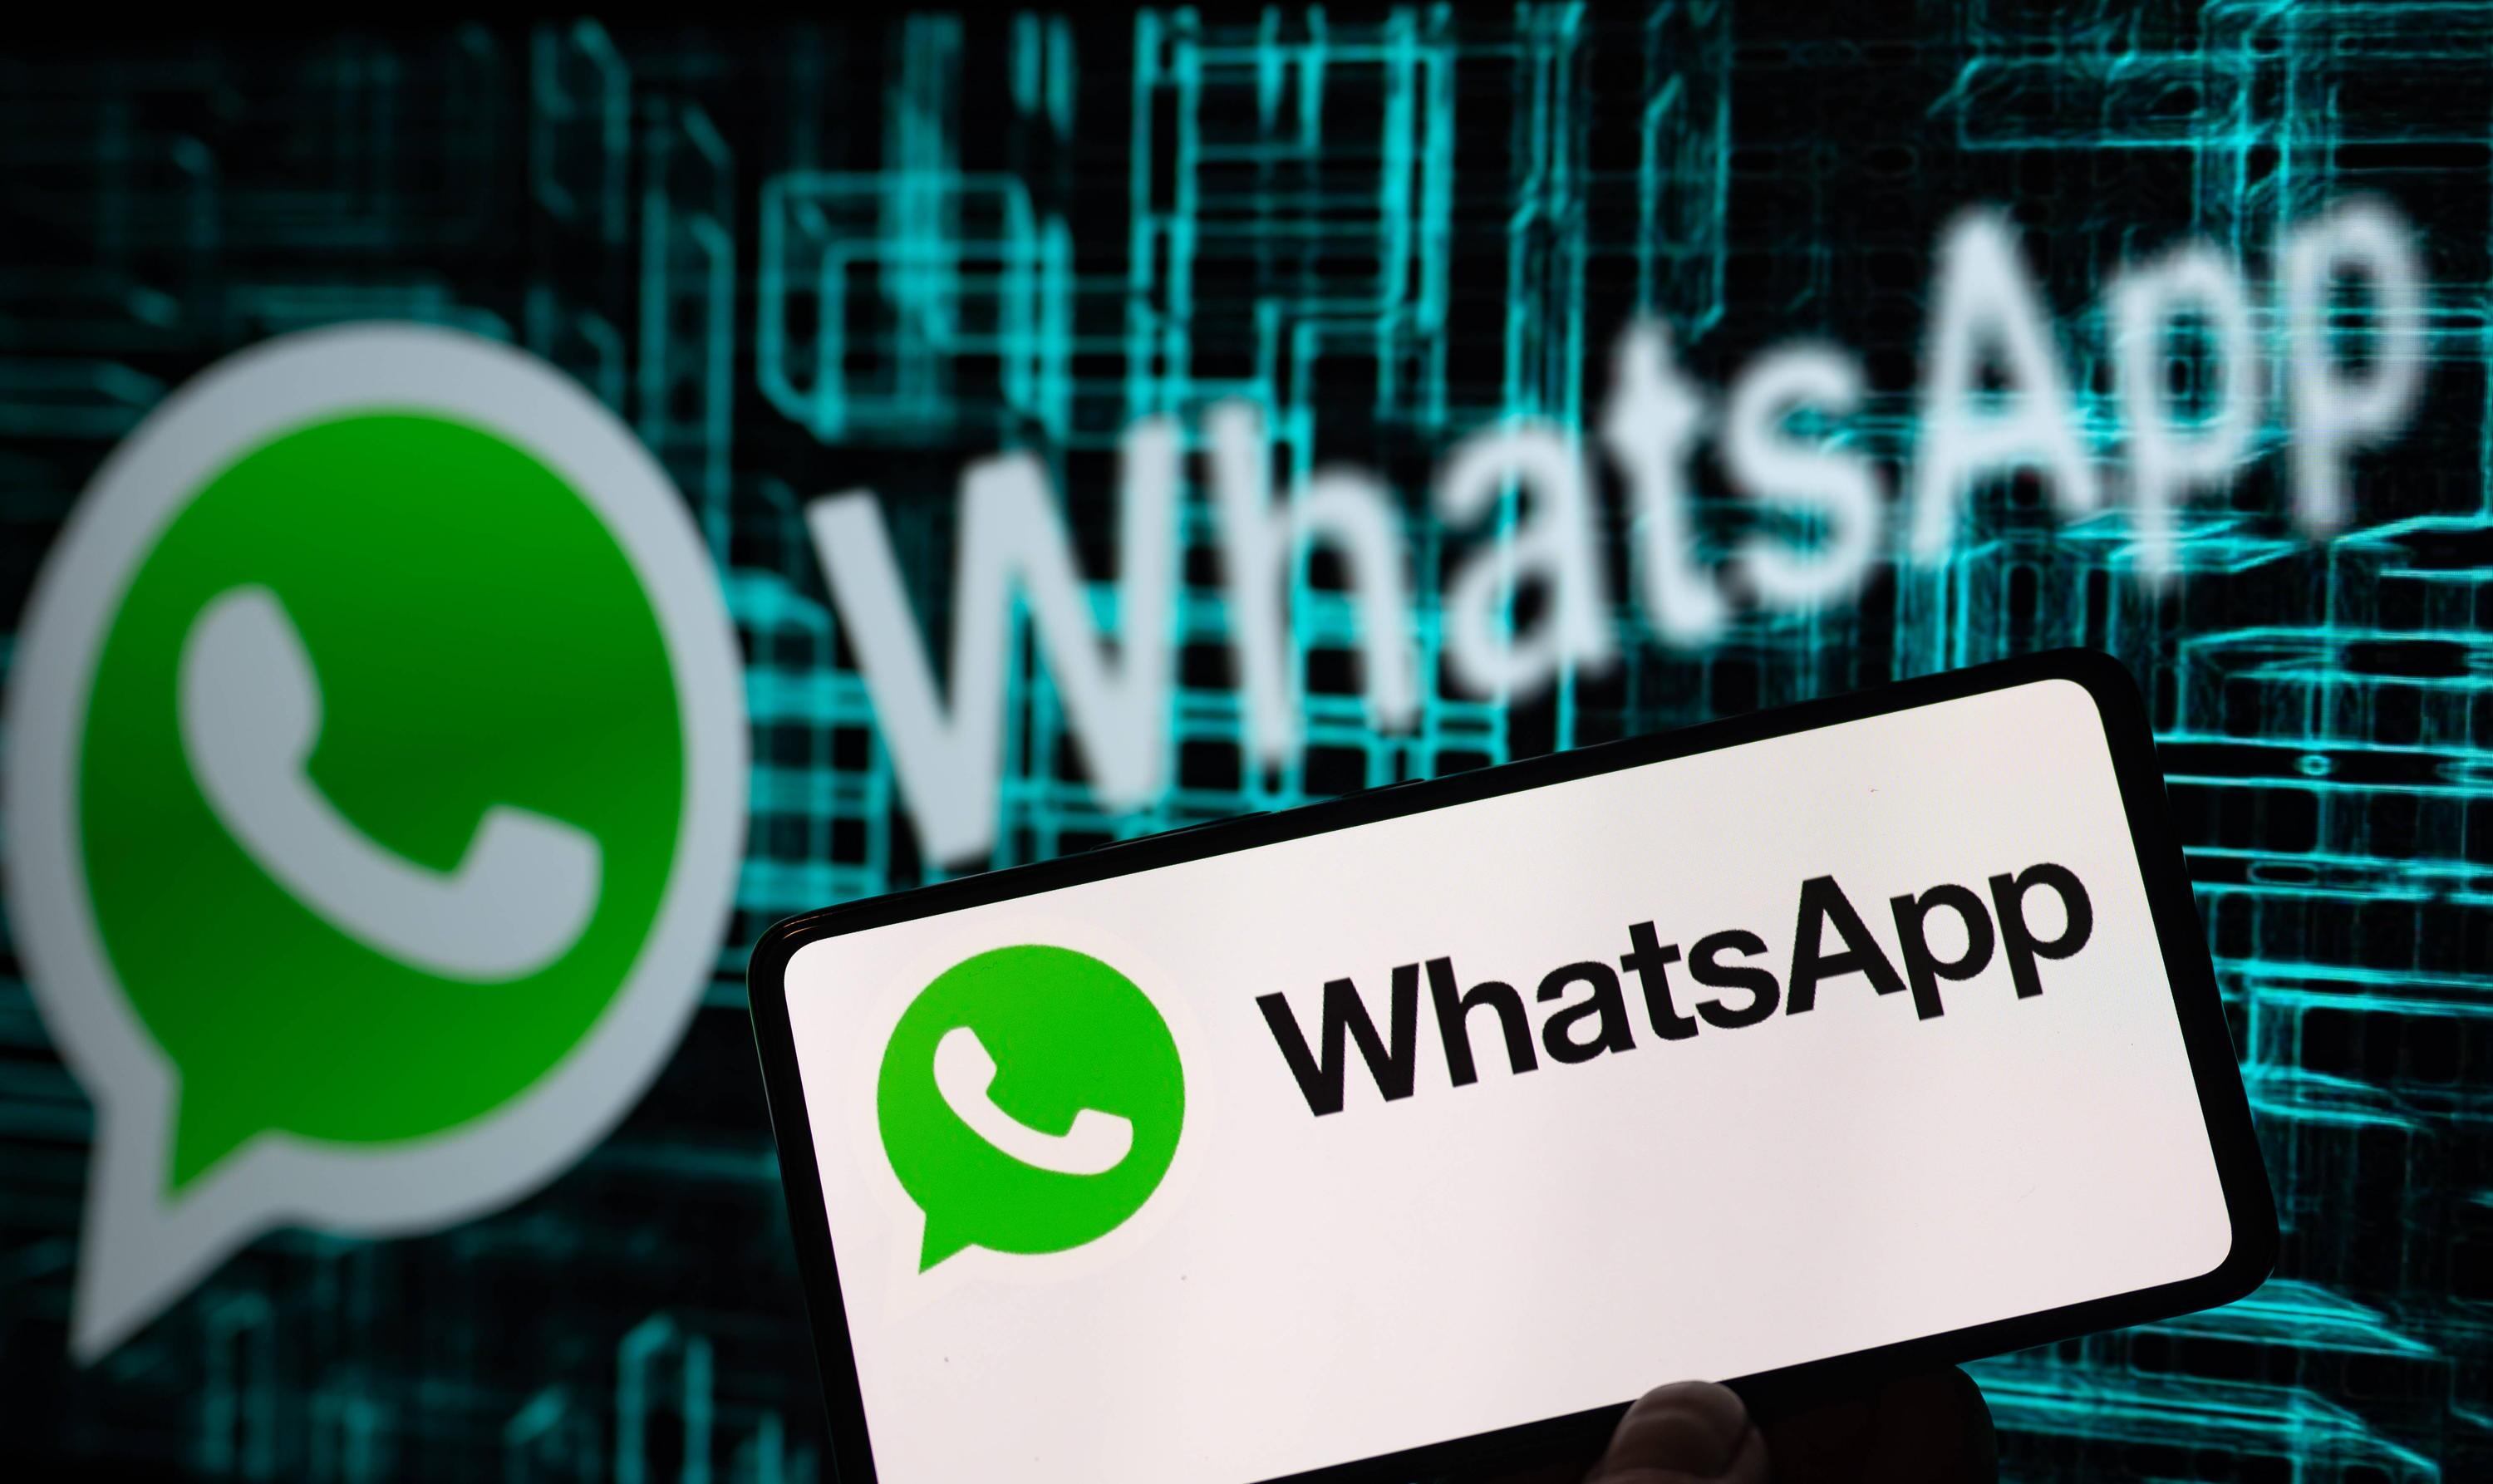 WhatsApp Client Development is useful